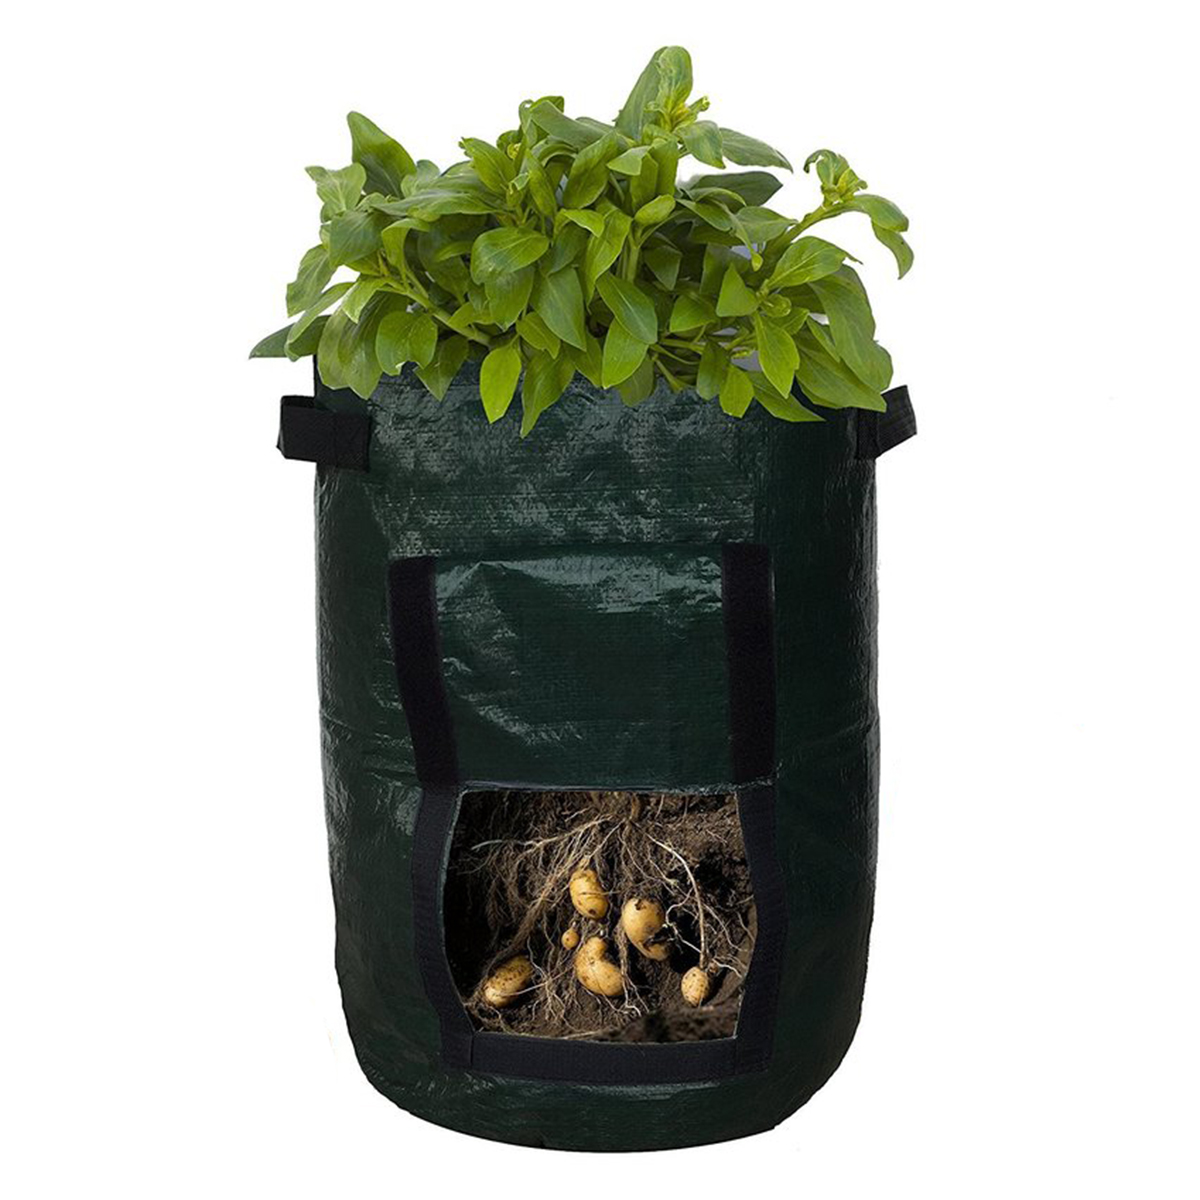 Potato-Planting-Bag-Planter-Grow-Bag-Growing-Pot-Vegetable-Container-1702555-1